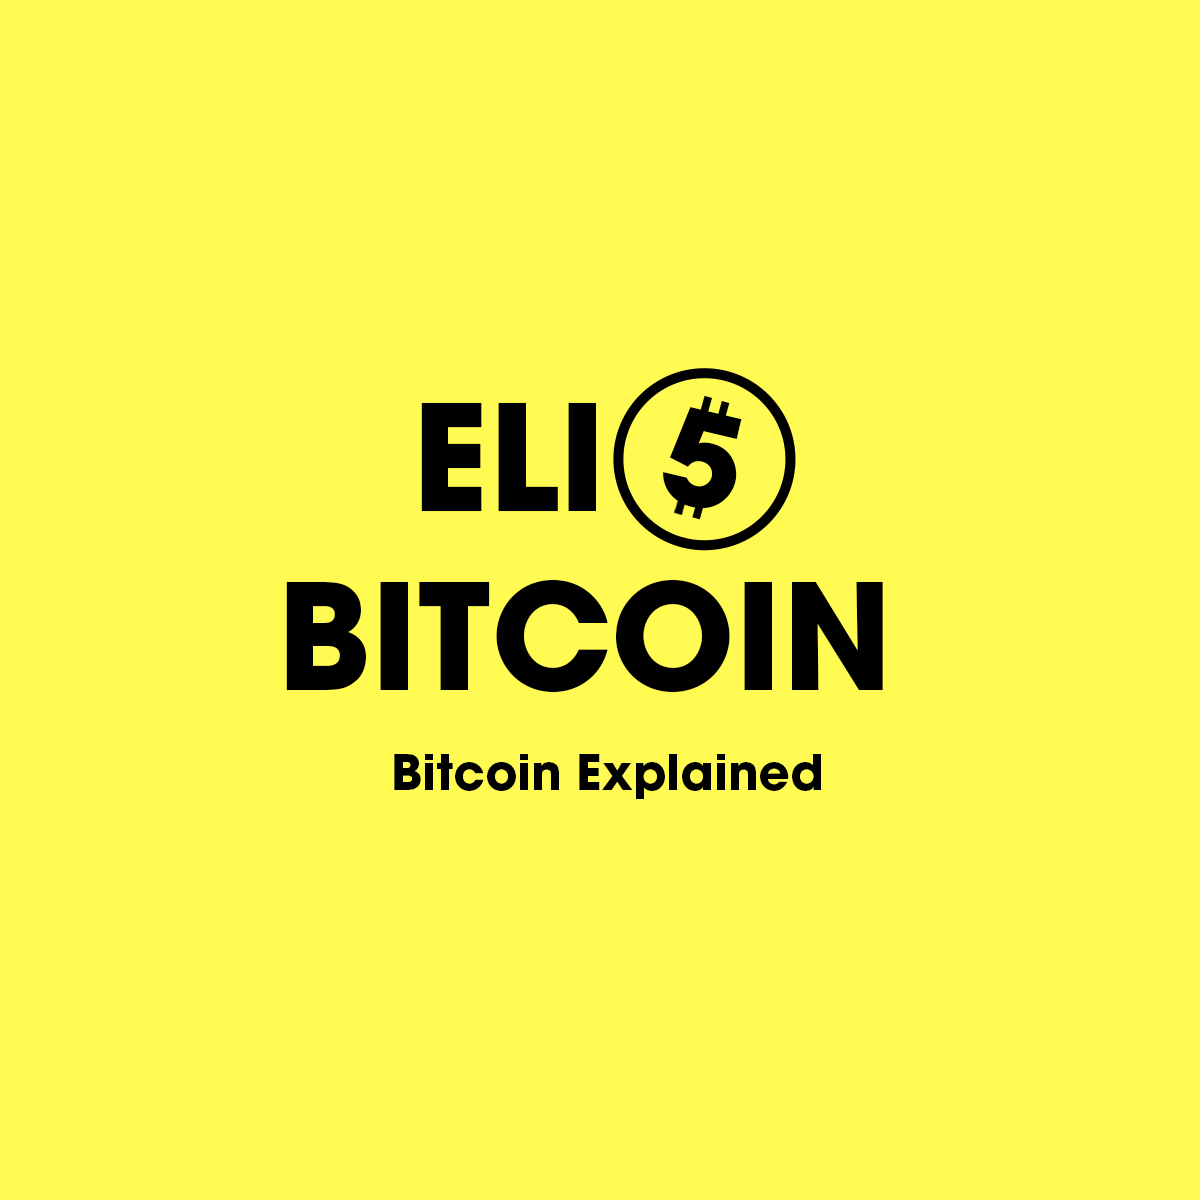 bitcoin reddit eli5